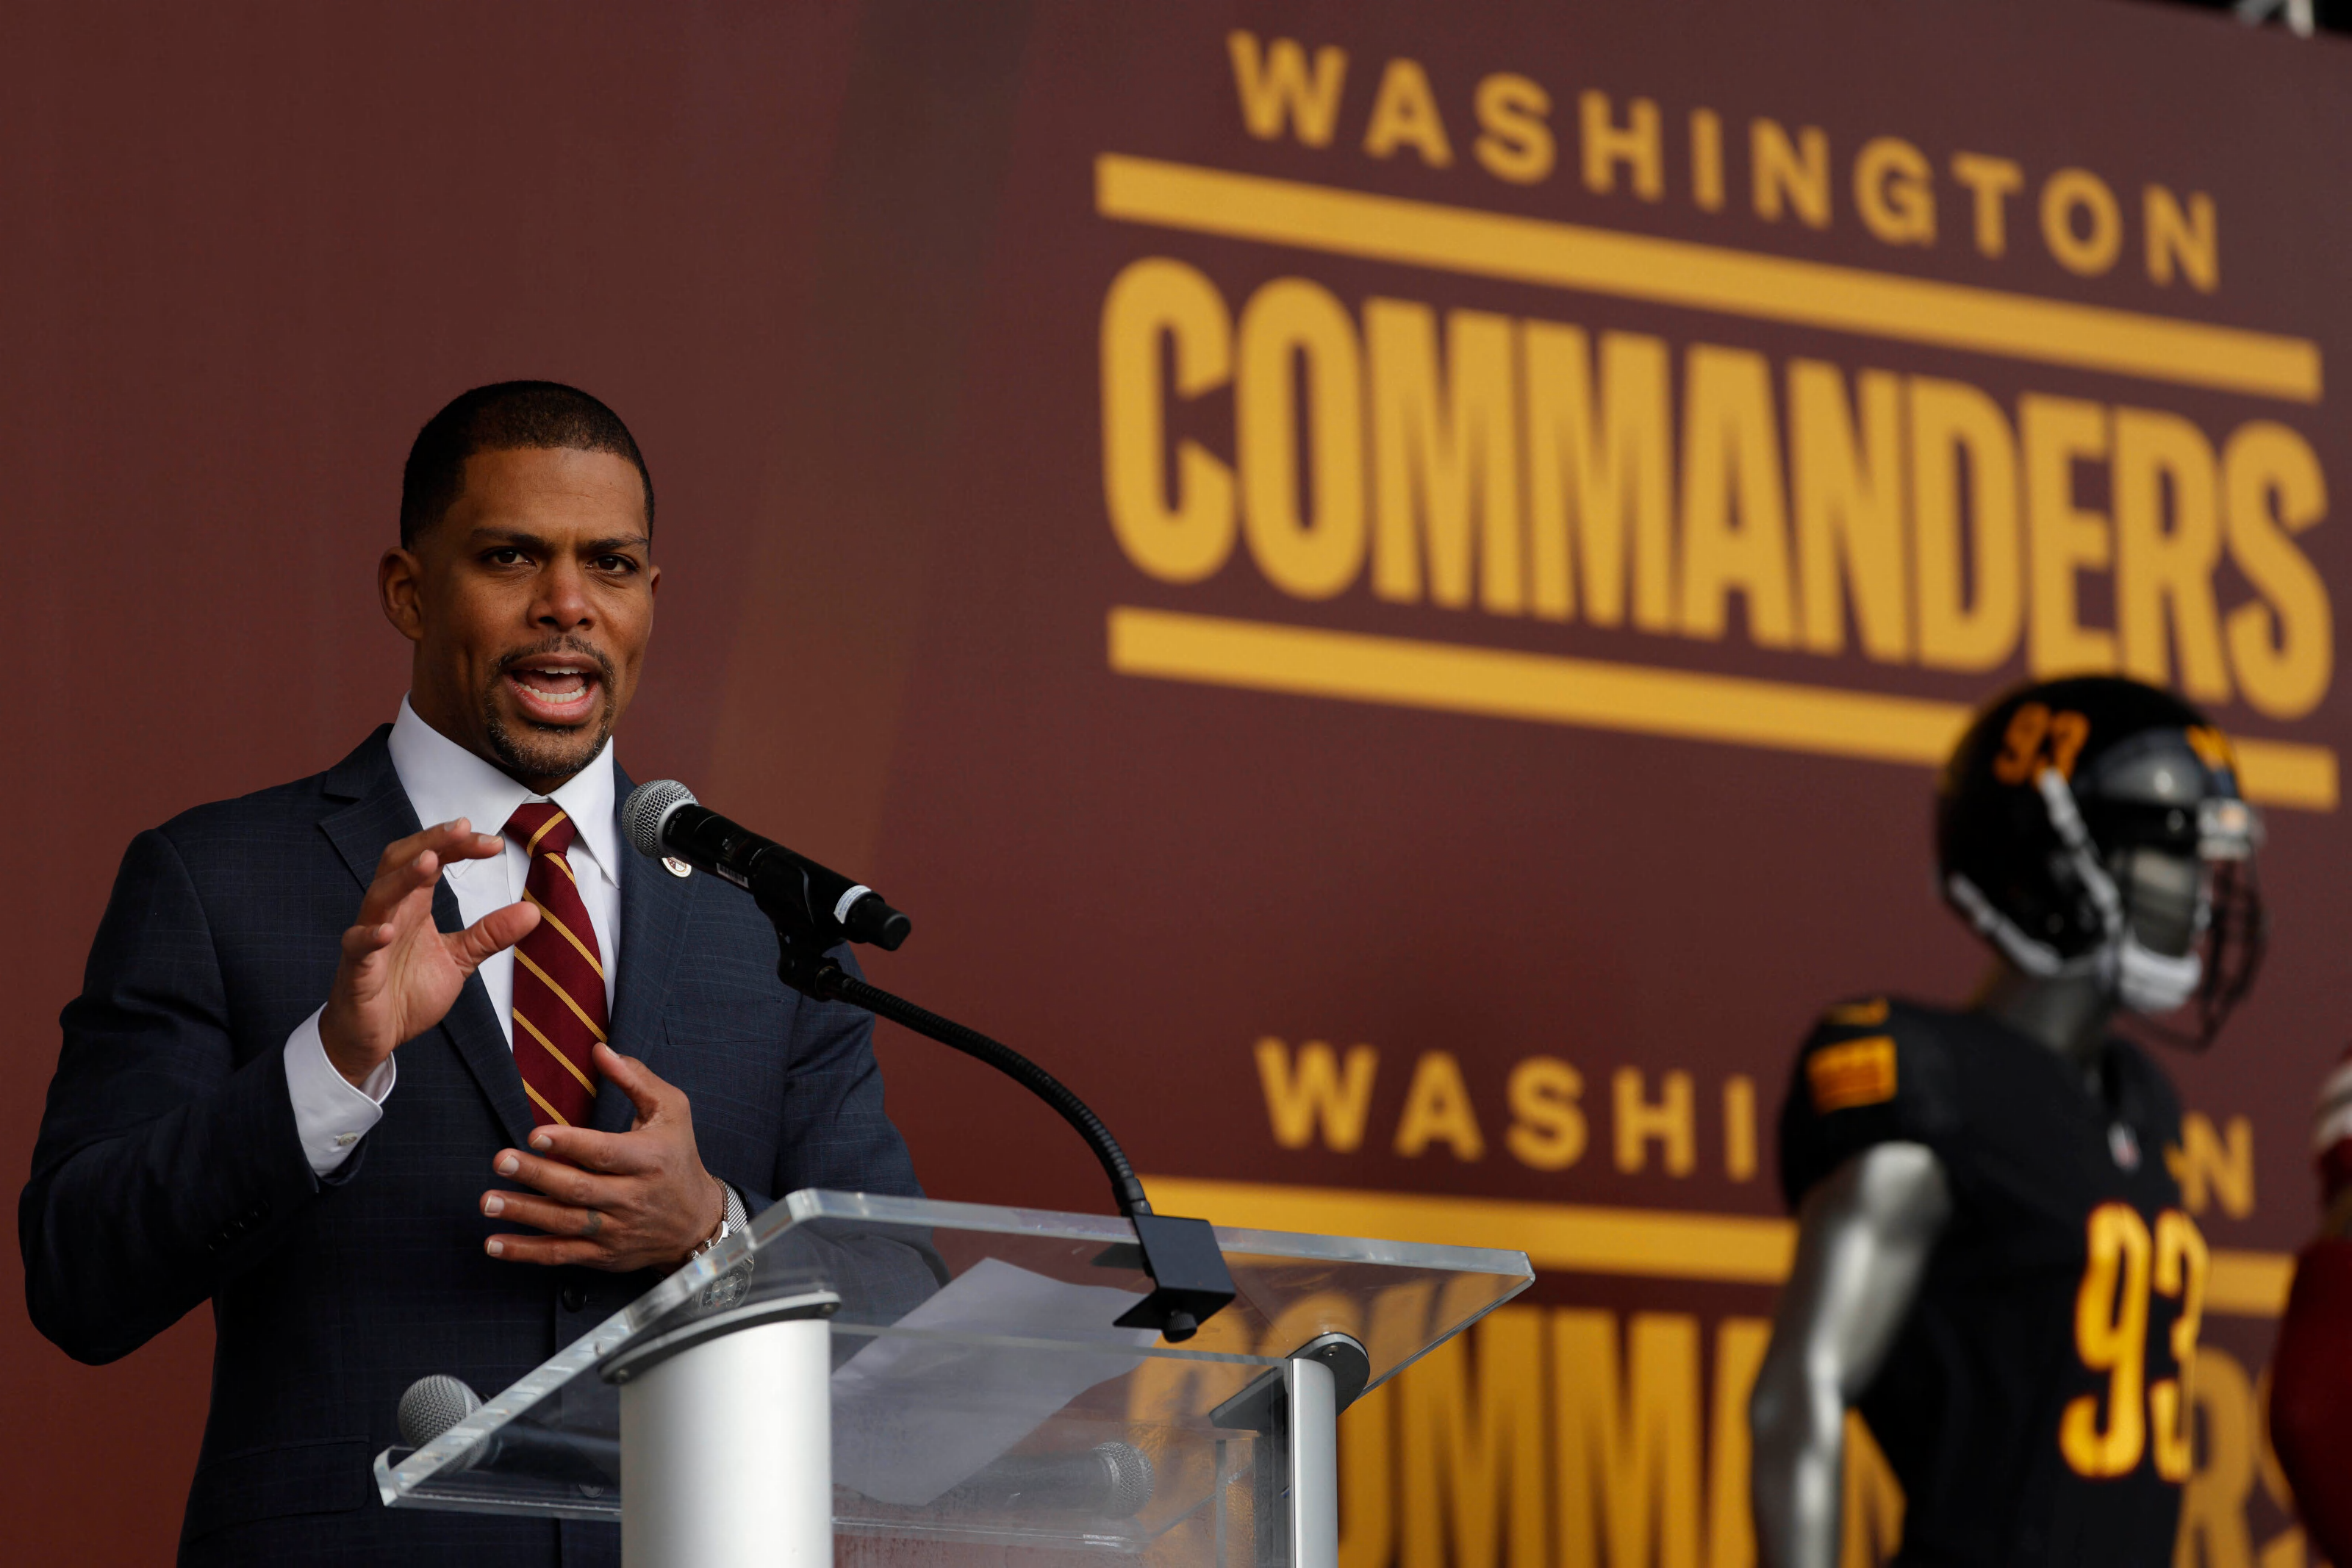 Washington Commanders land Carson Wentz in trade with Indianapolis Colts, Washington Commanders